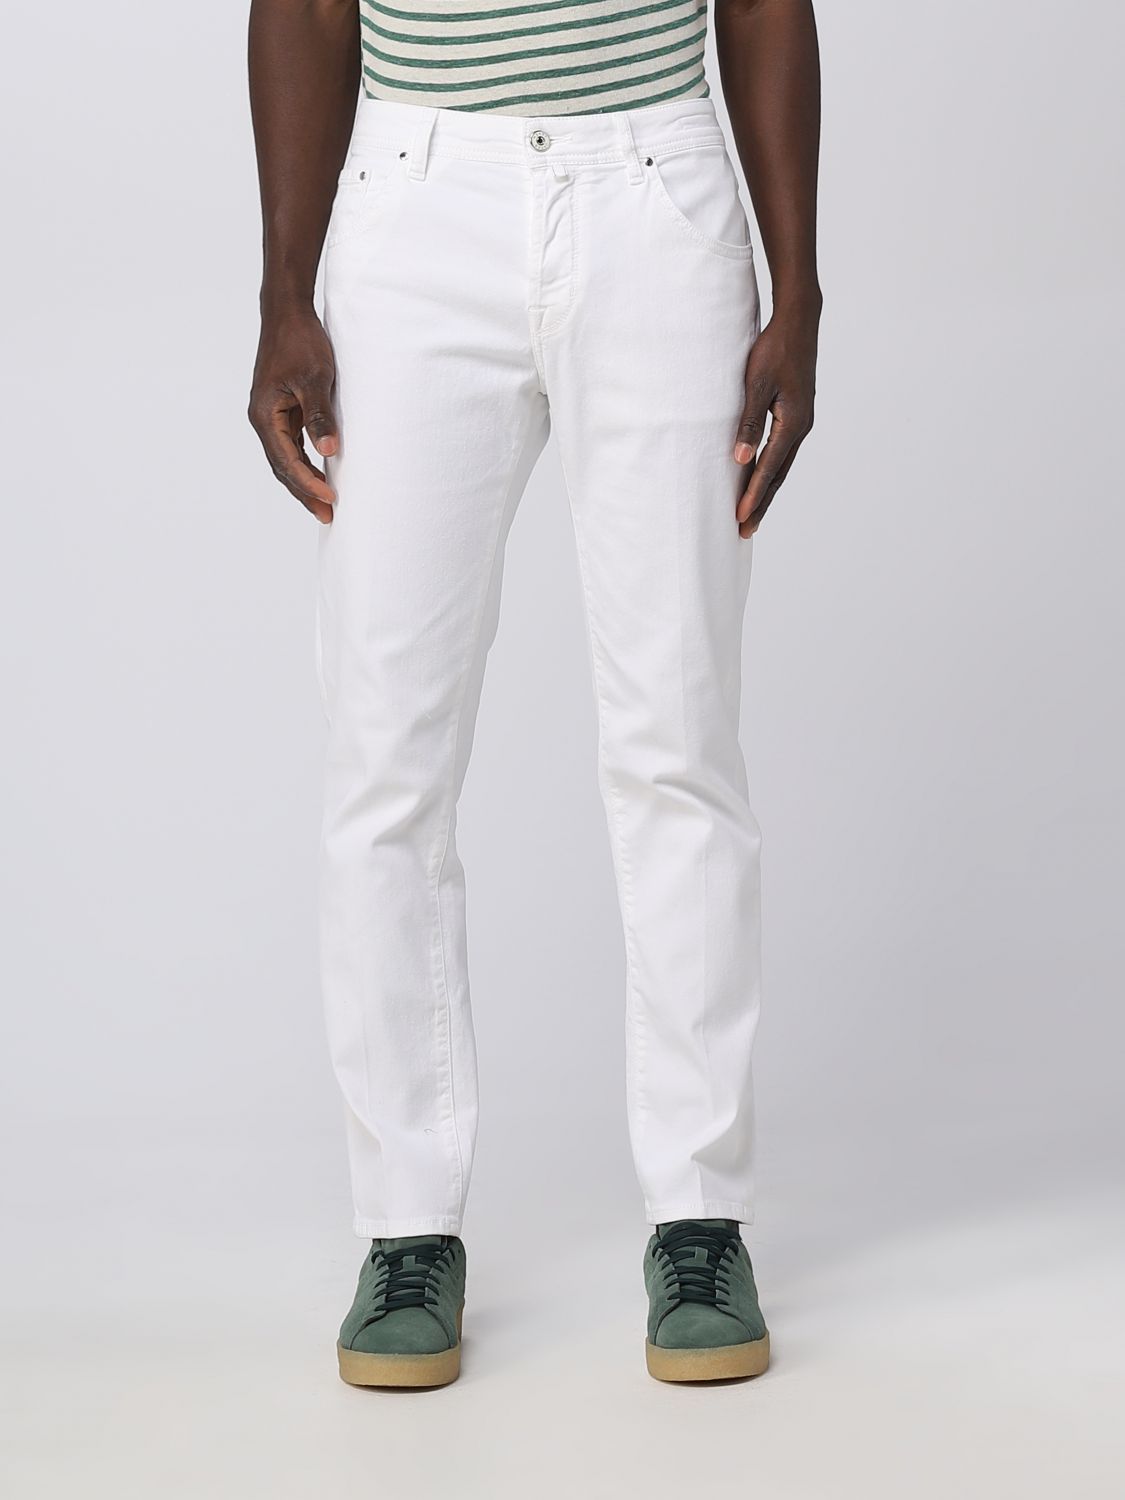 Pol Ende vest jeans for man - White | Jacob Cohen jeans UQI1536S3633 online at GIGLIO.COM